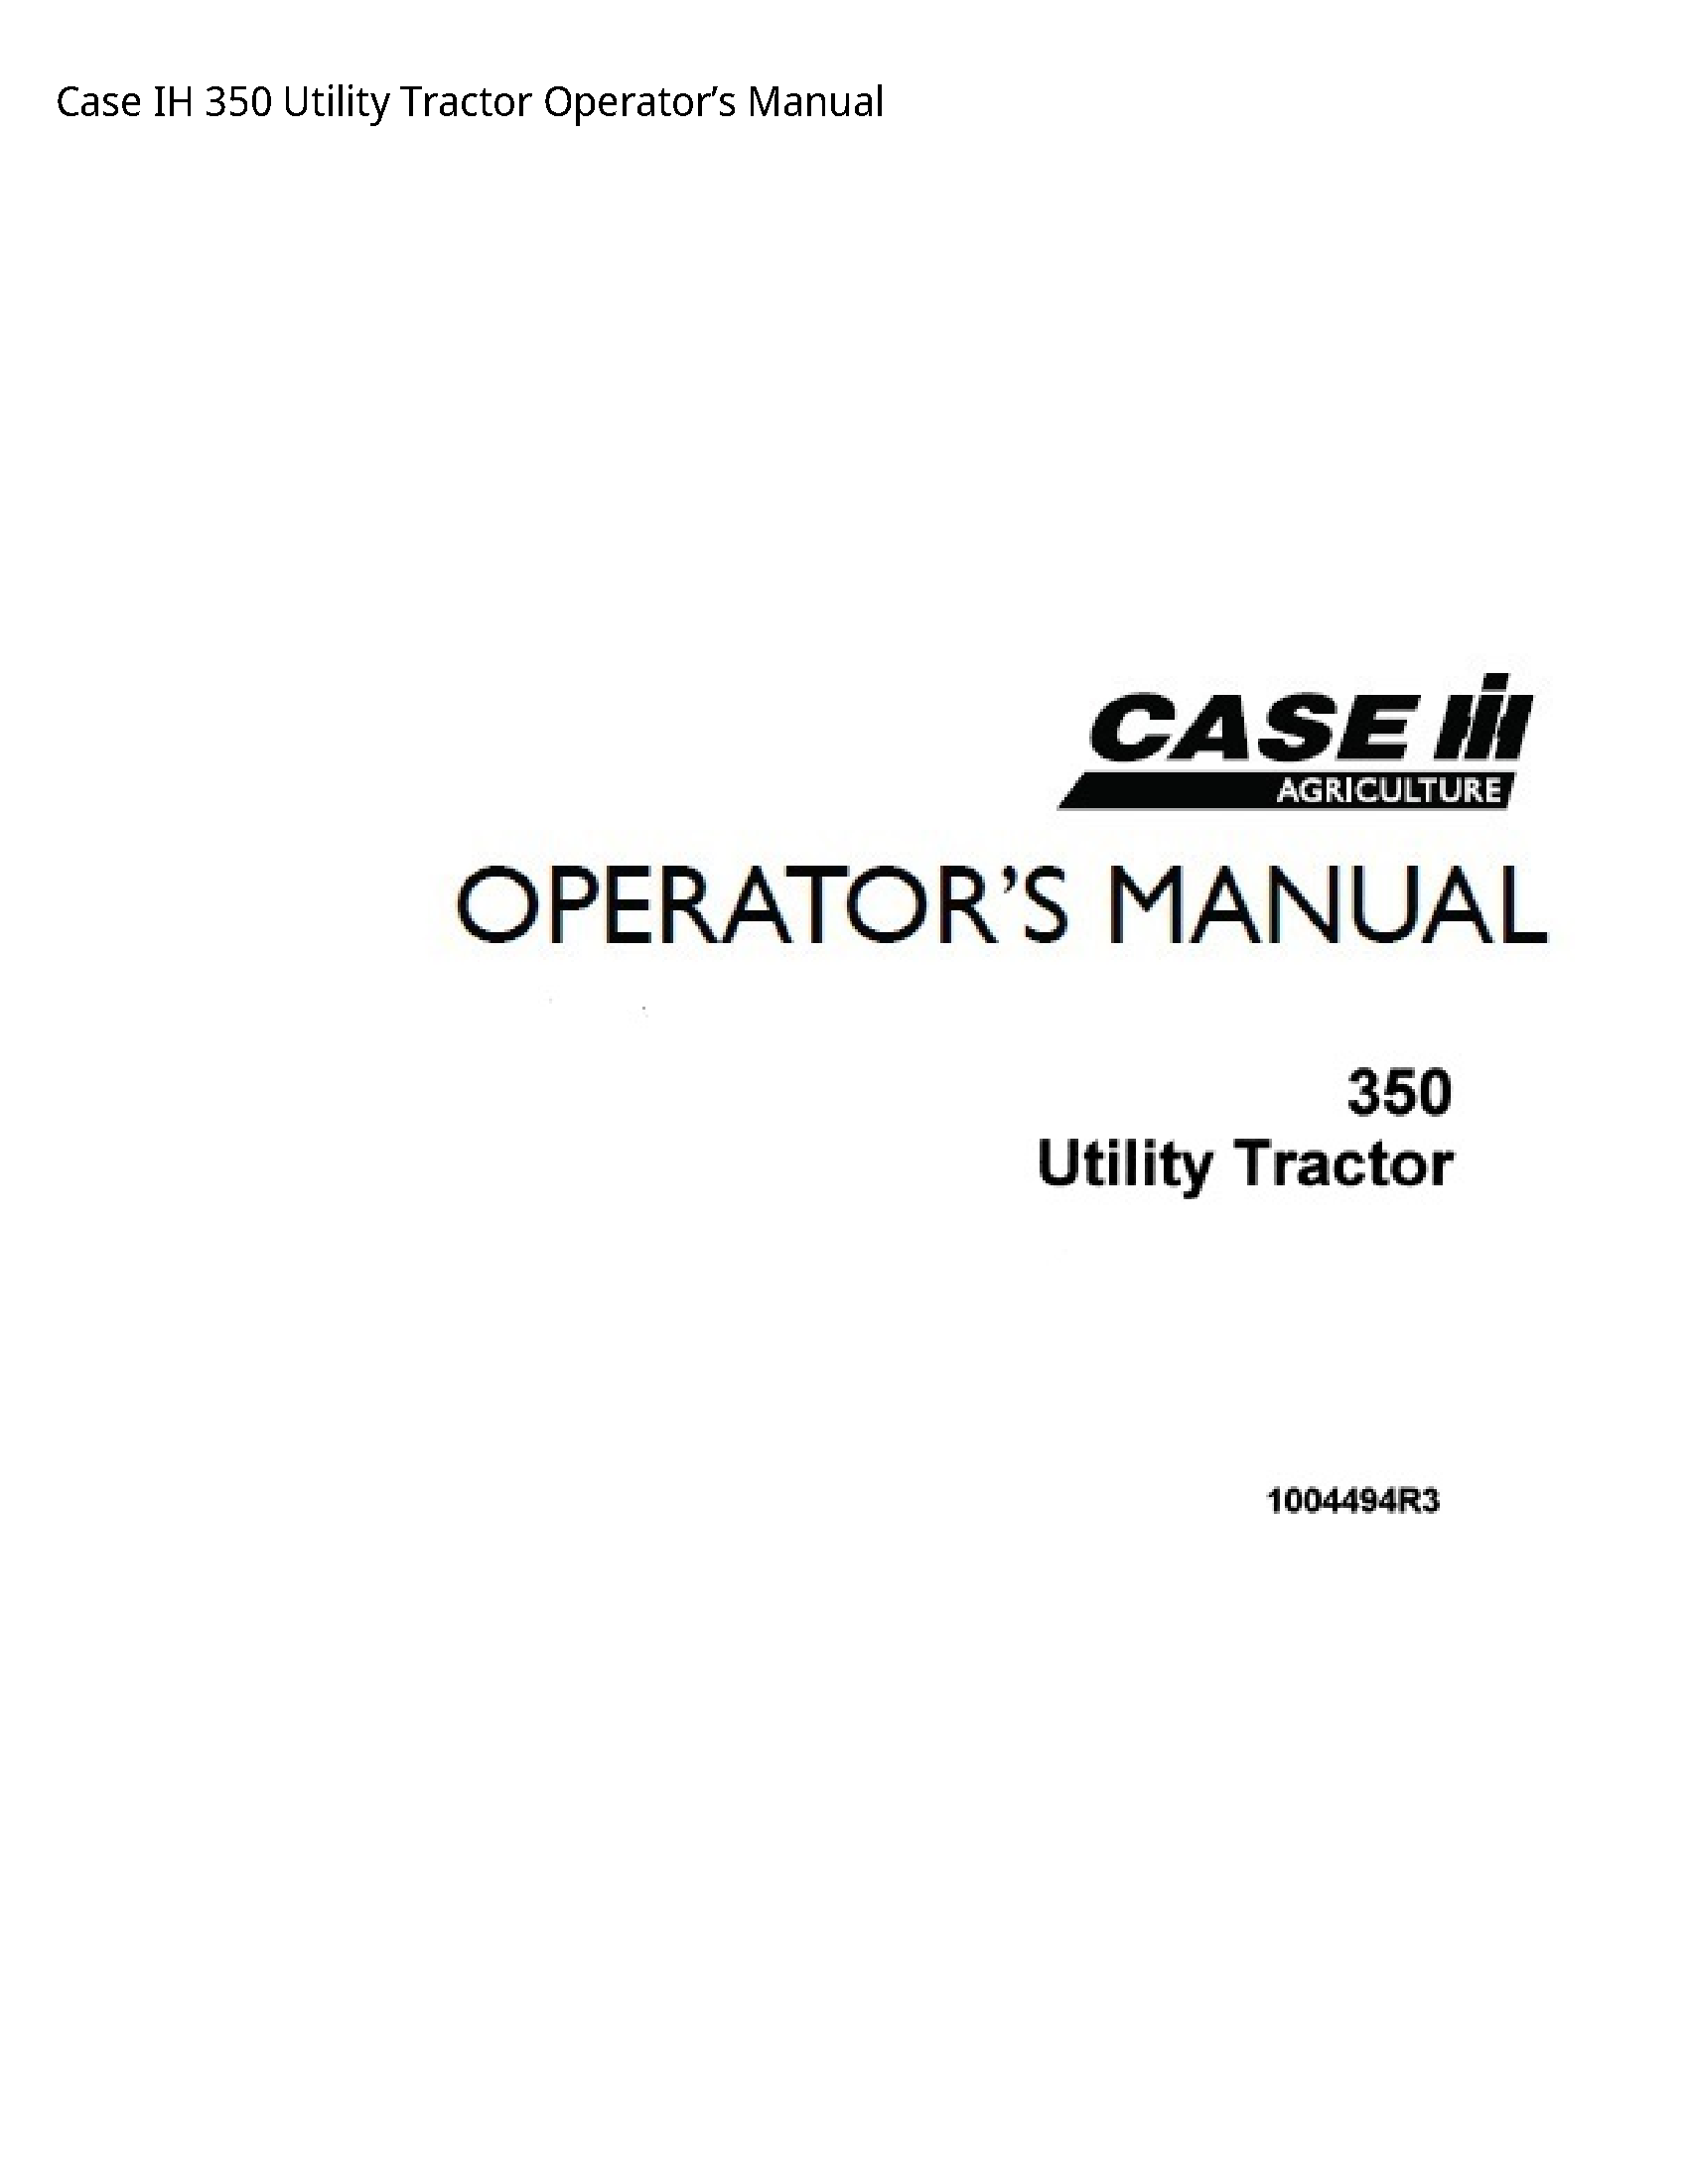 Case/Case IH 350 IH Utility Tractor Operator’s manual